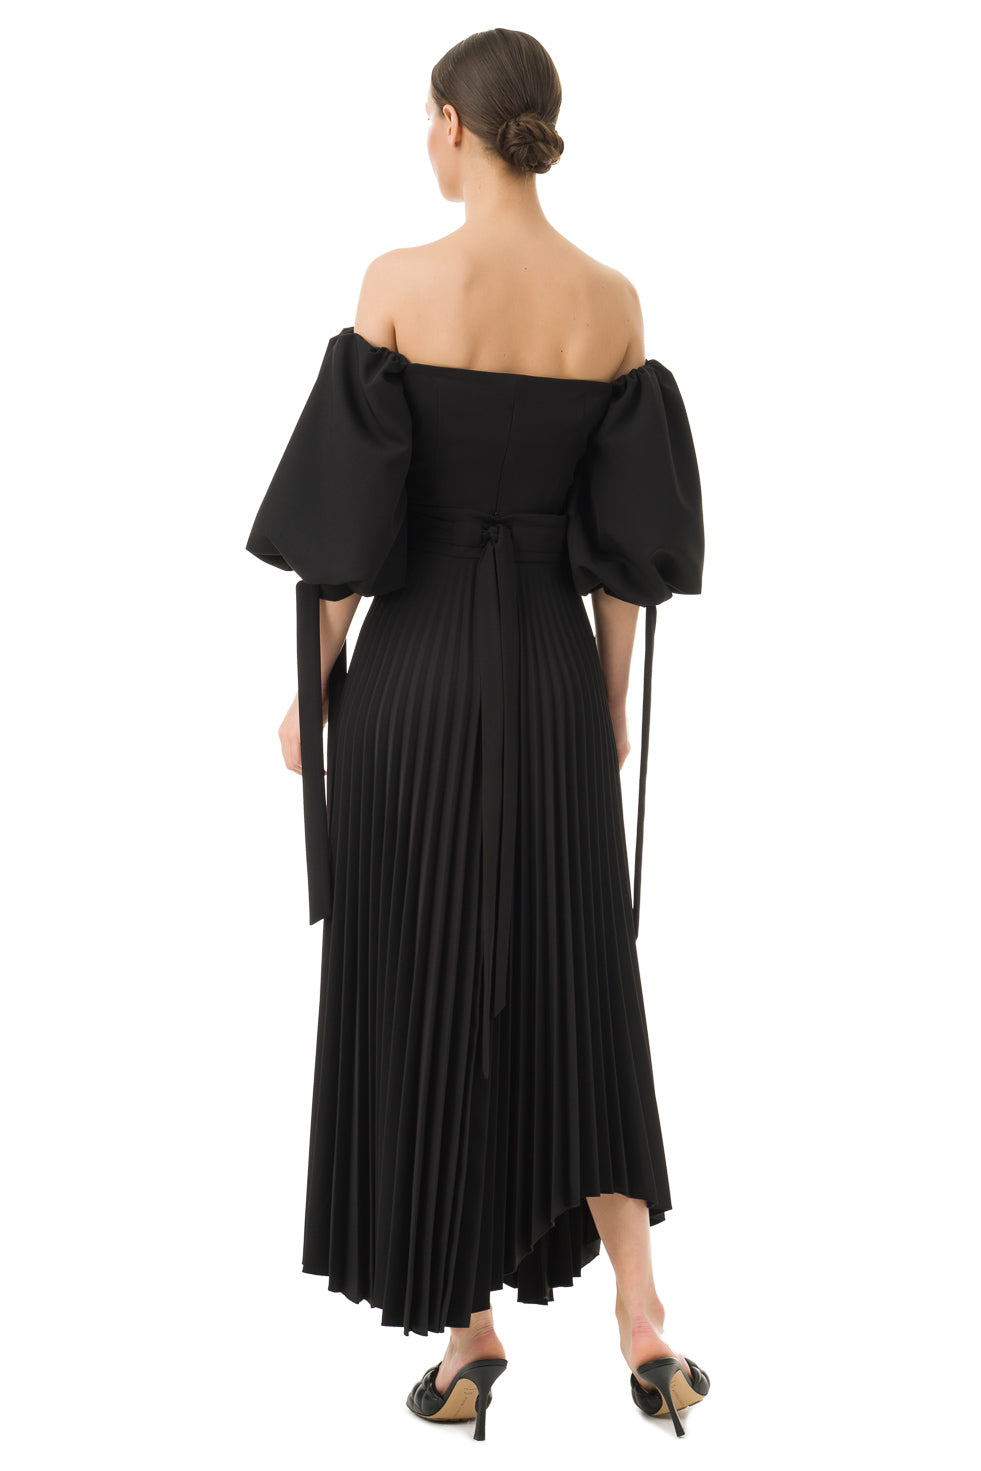 Tammarra Black Asymmetric Pleated Long Skirt